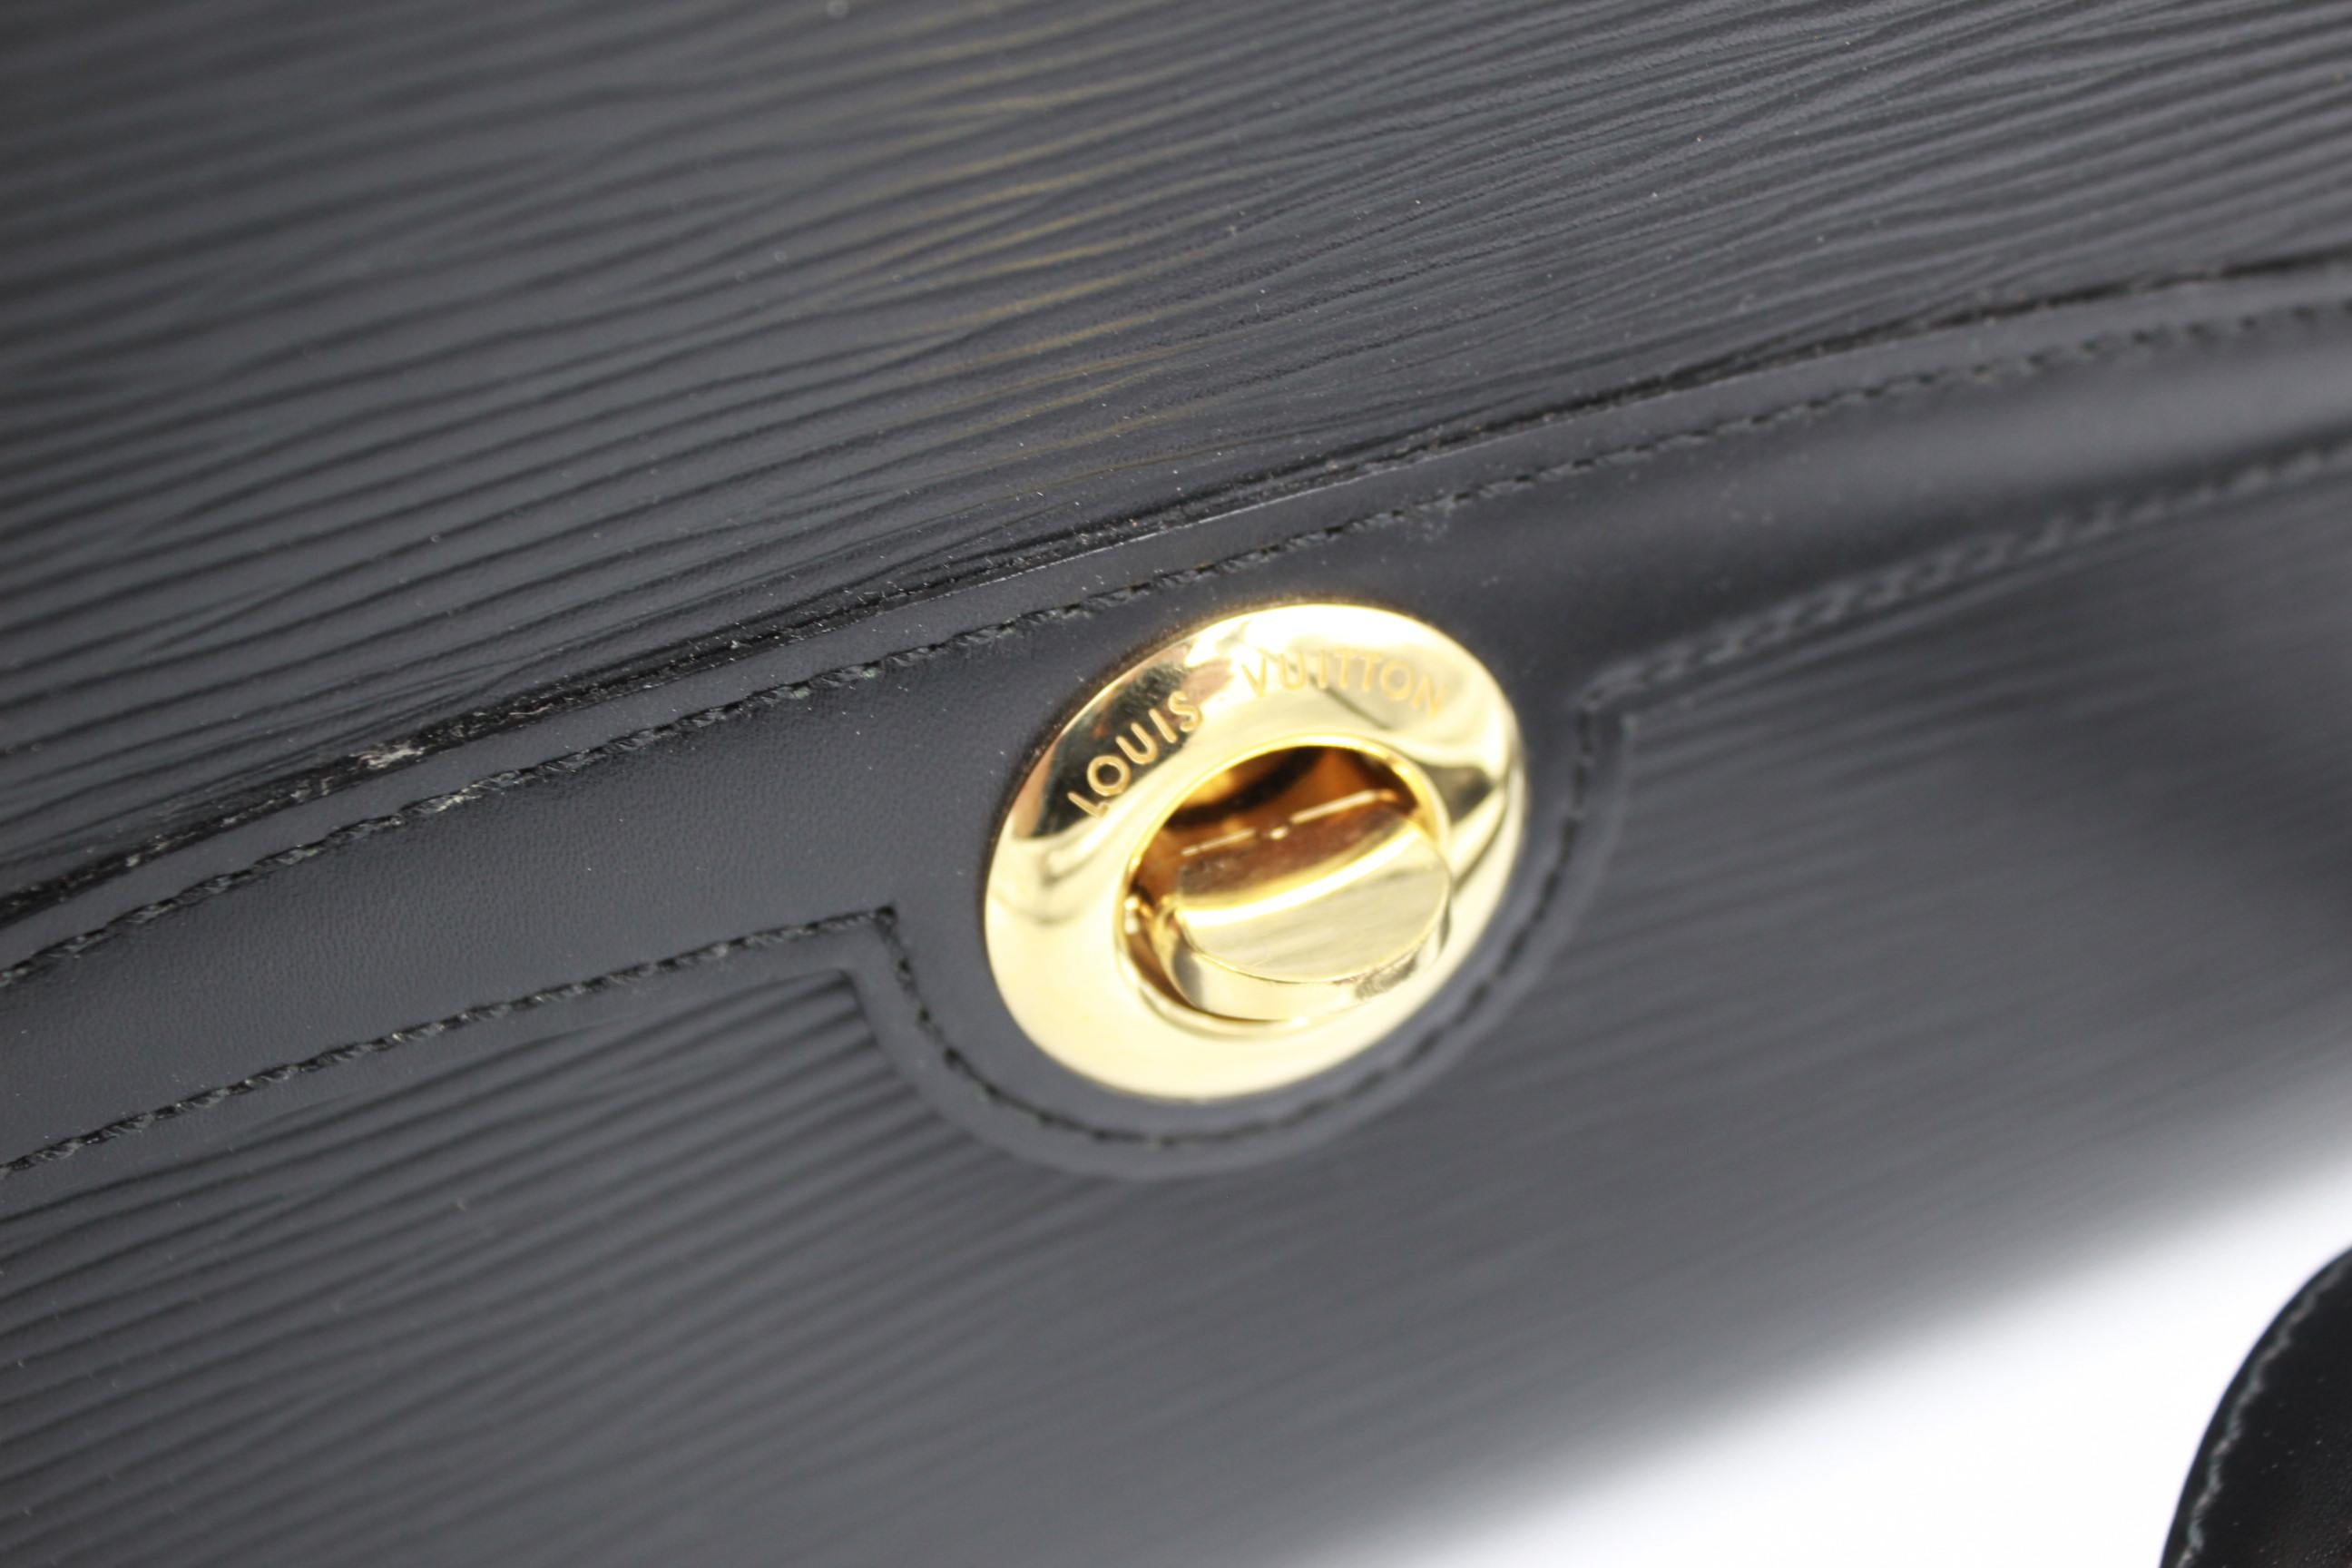 Louis Vuitton vintage Arche clutch in black epi leather. 
With detachable strap to wear it as a clutch.
Zip pocket inside
Size 24x17